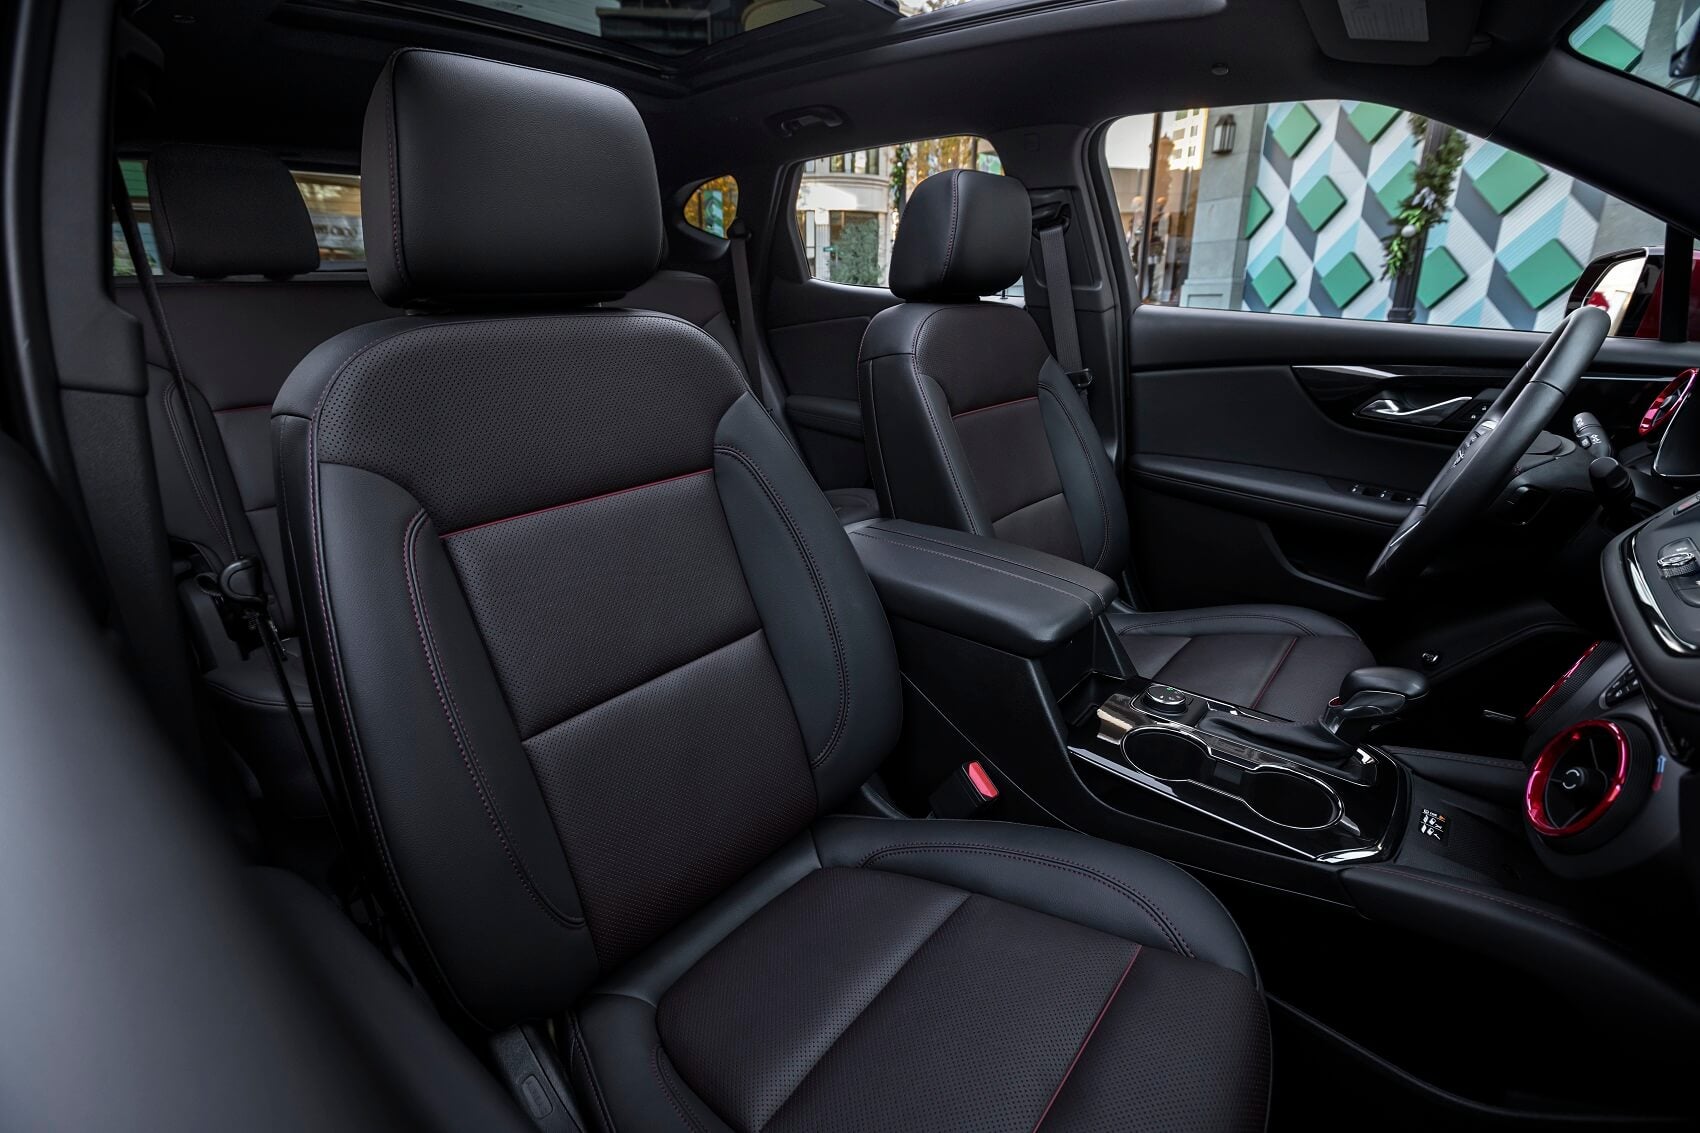 Chevy Blazer Interior Review New Hudson IN
